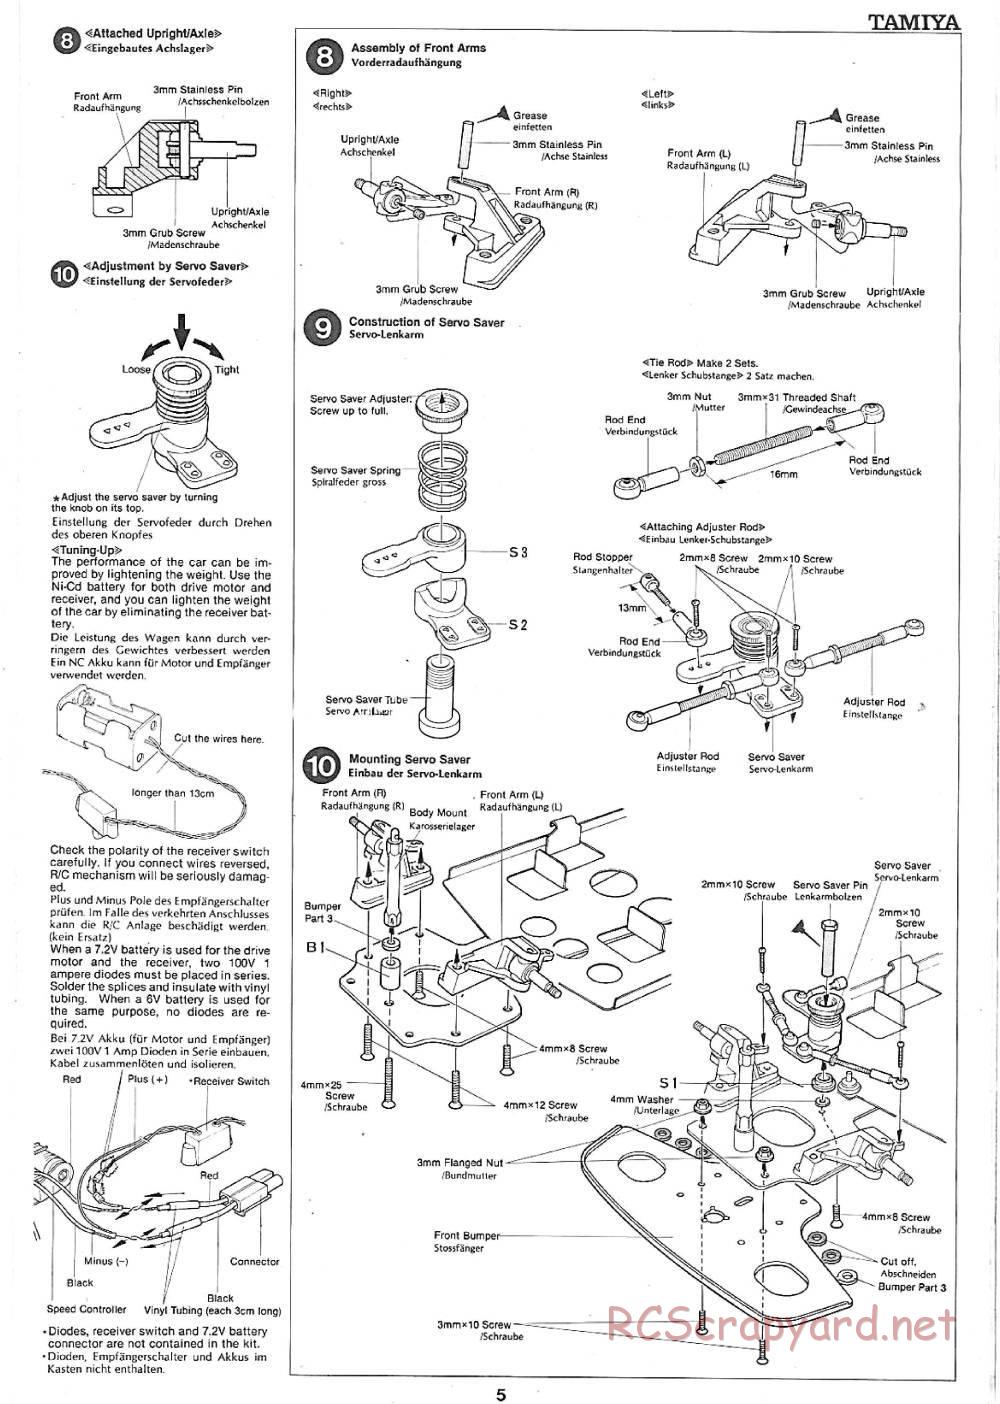 Tamiya - VW Golf Racing Group 2 (CS) - 58025 - Manual - Page 5